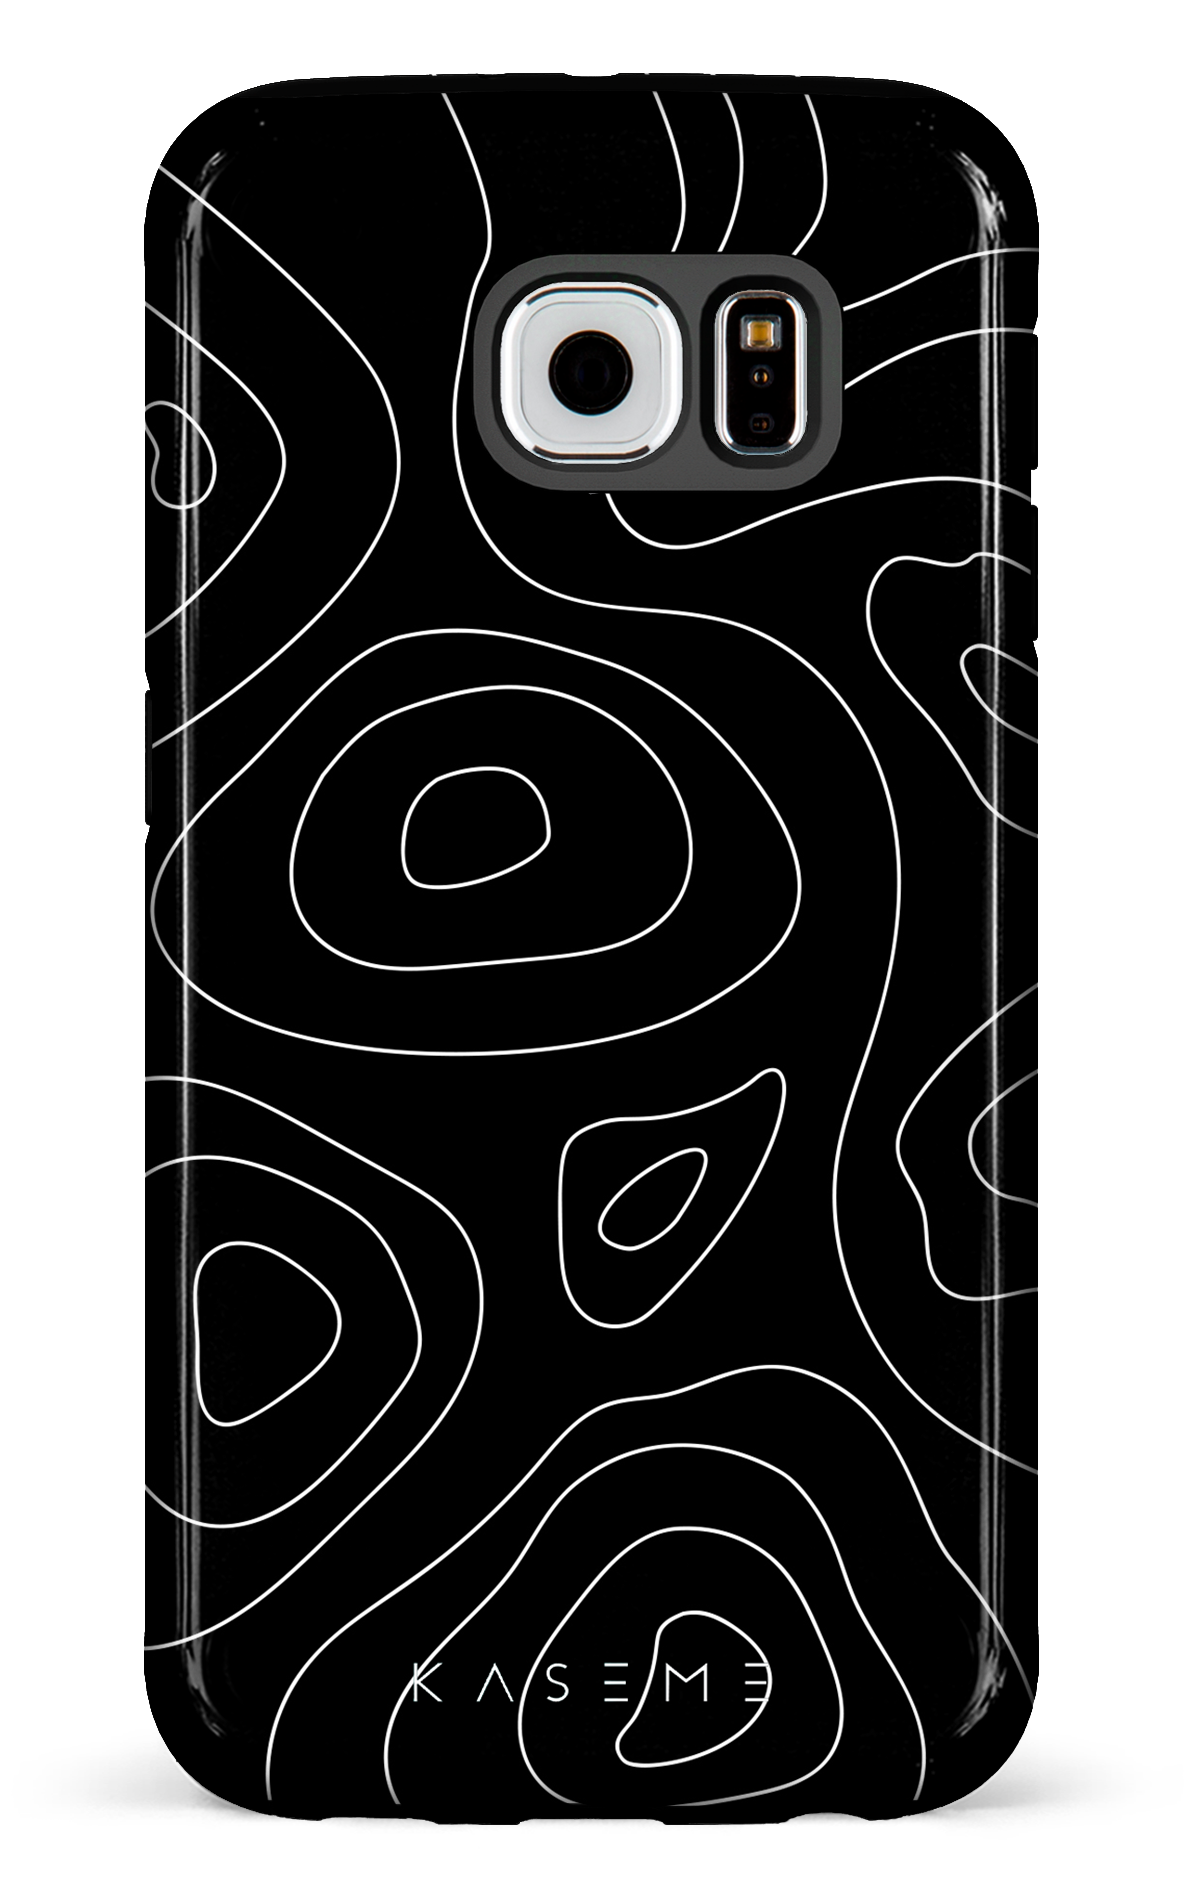 Enigma - Galaxy S6